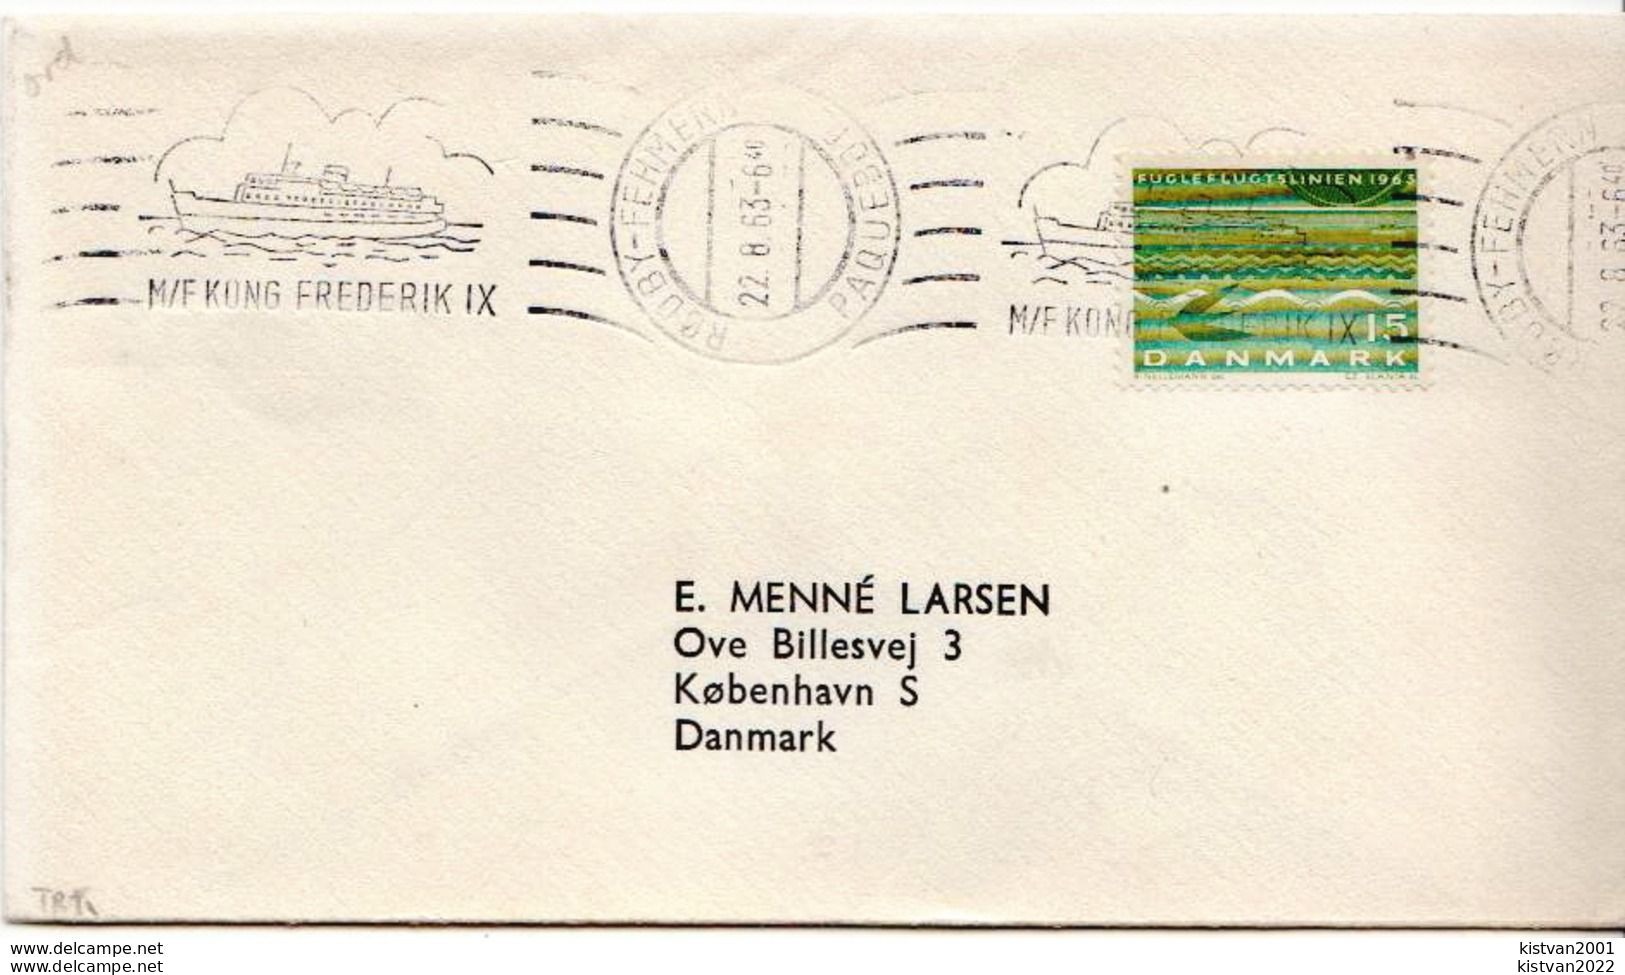 Postal History Cover: Denmark Cover With M/F KONG FREDERIK IX Ship Cancel - Storia Postale